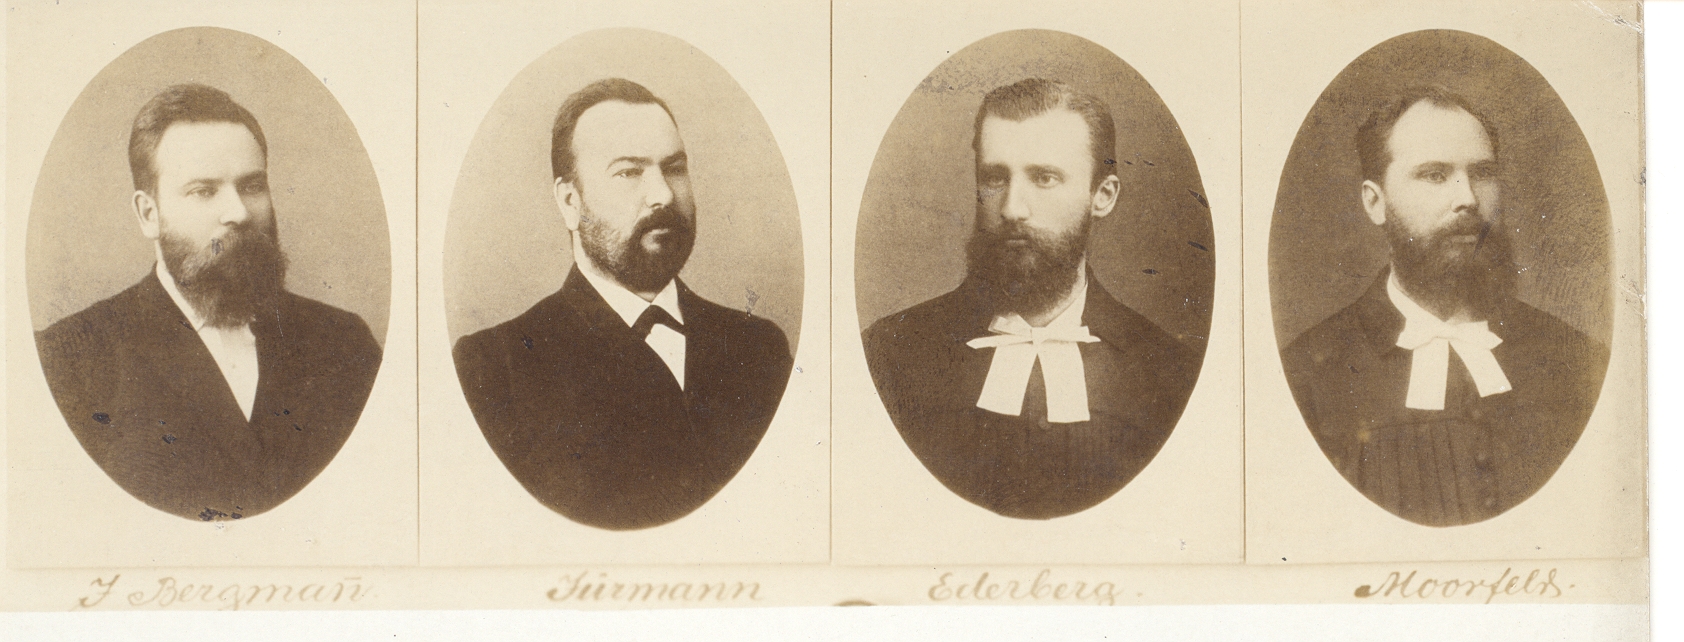 J. Bergmann, m. Jürmann, f. Ederberg, a. Mohrfeldt